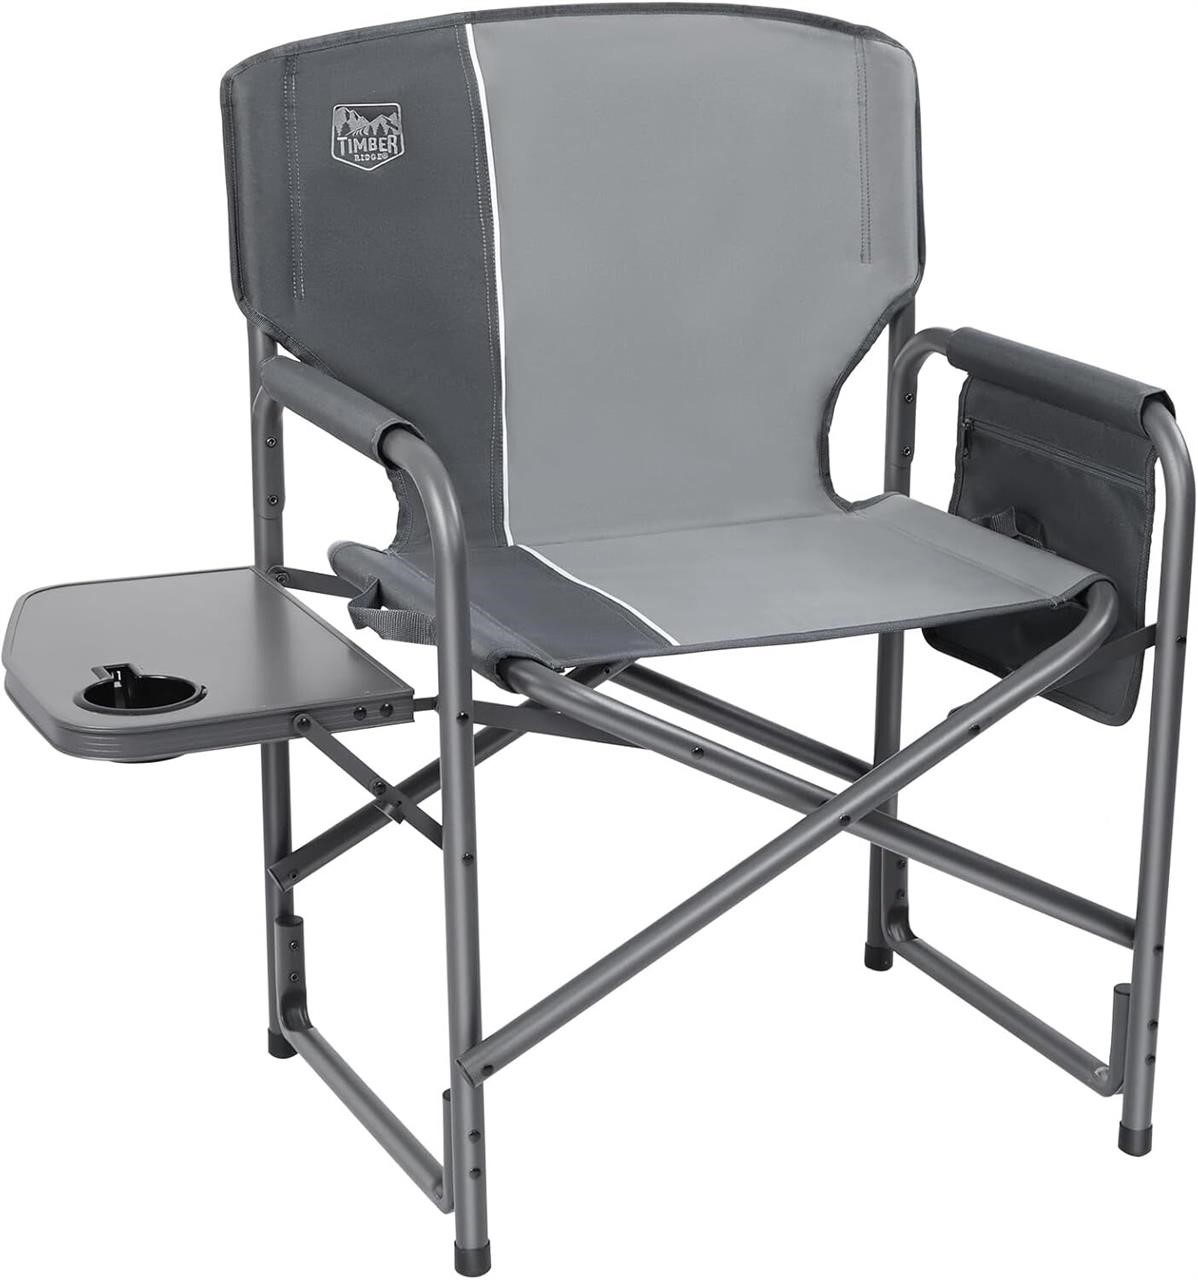 Lightweight Oversized Camping Chair  400lbs